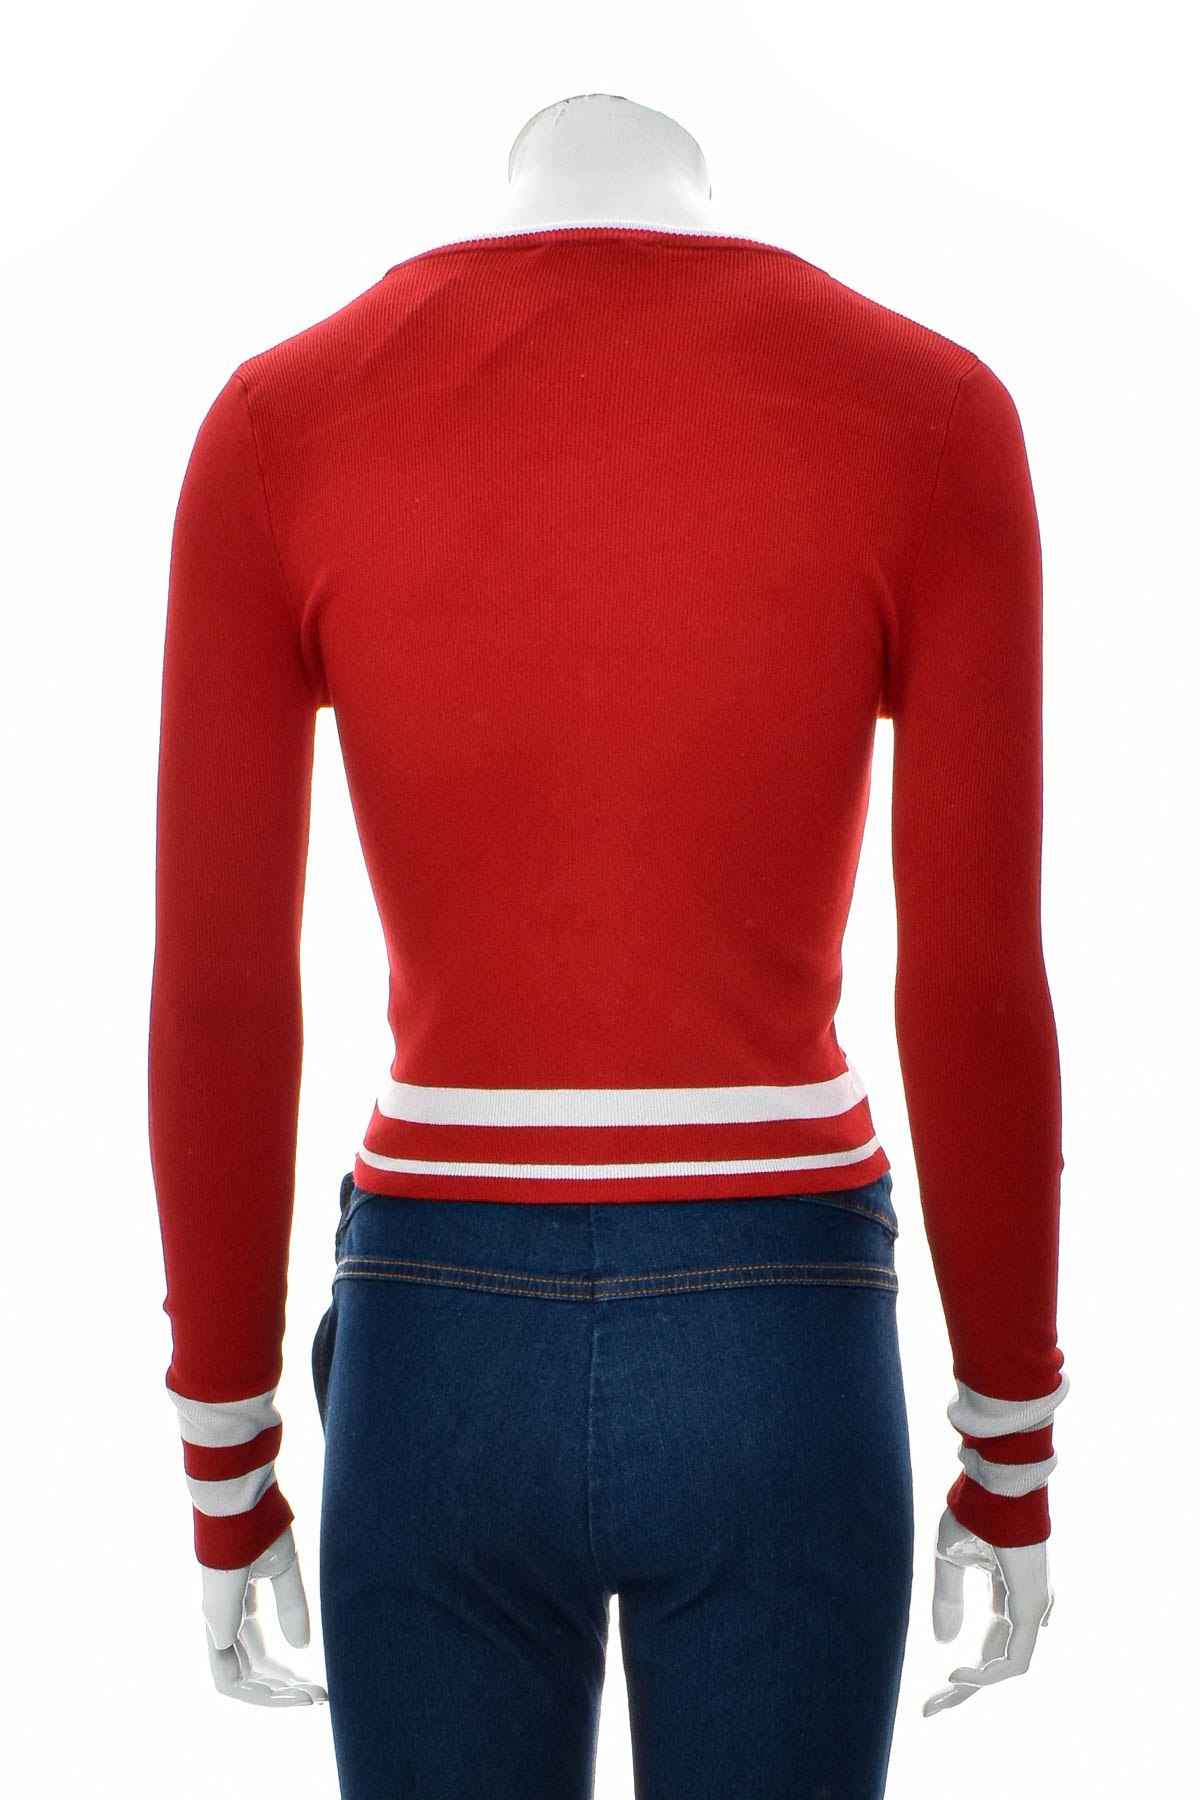 Women's sweater - Terranova - 1